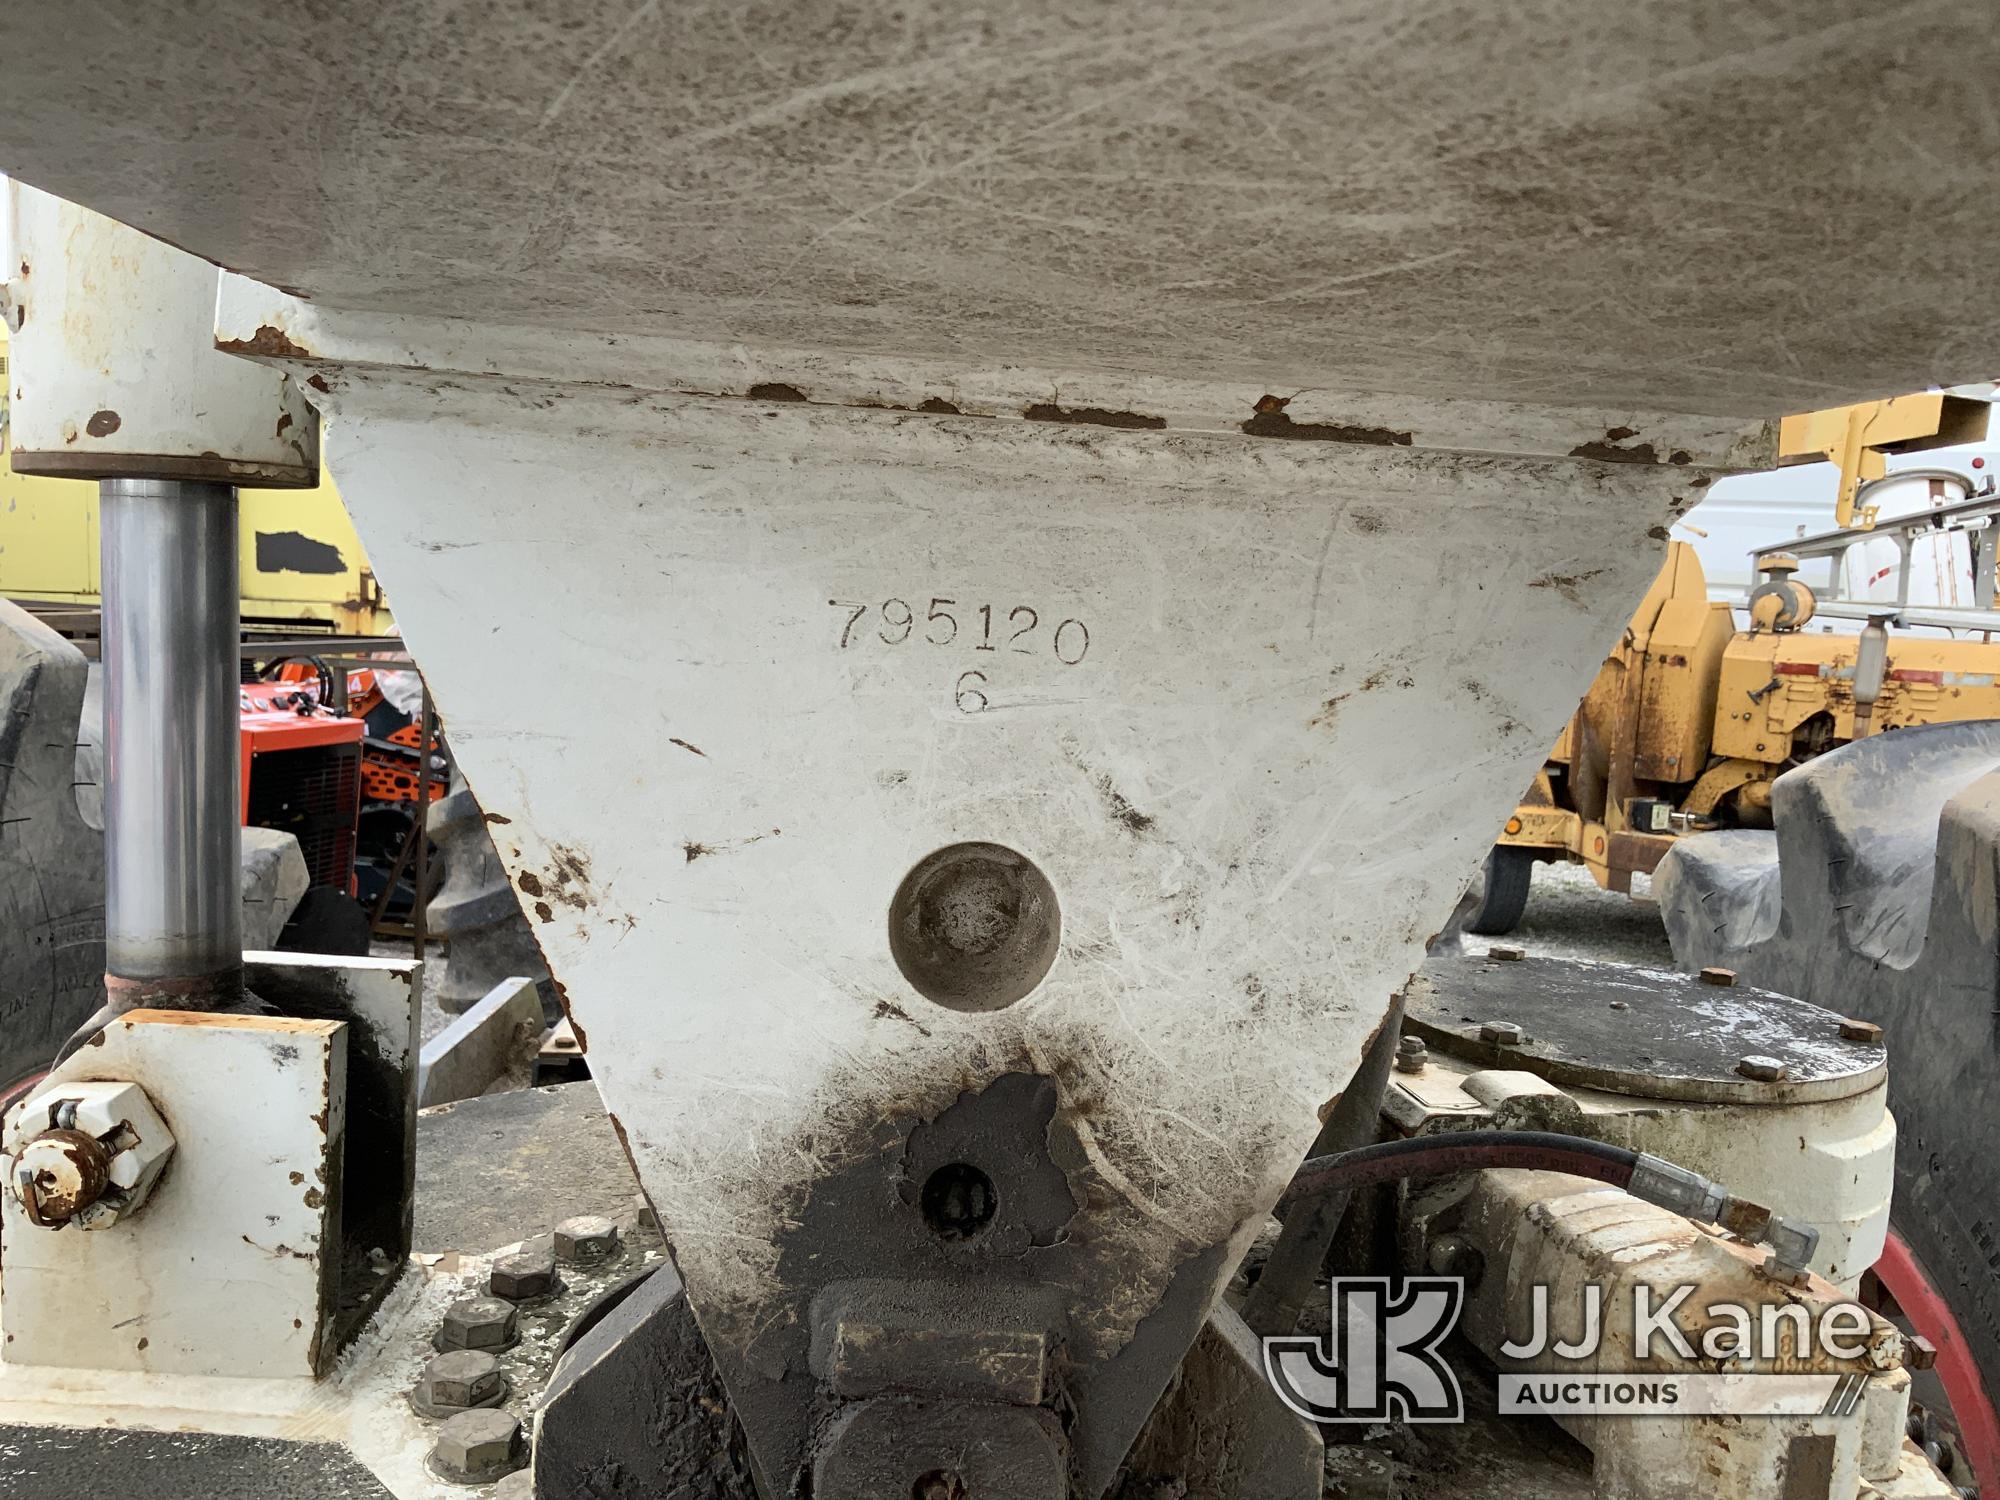 (Fort Wayne, IN) Kershaw SkyTrim 75X Articulating Rubber Tired Log Skidder Runs, Moves & Operates) (